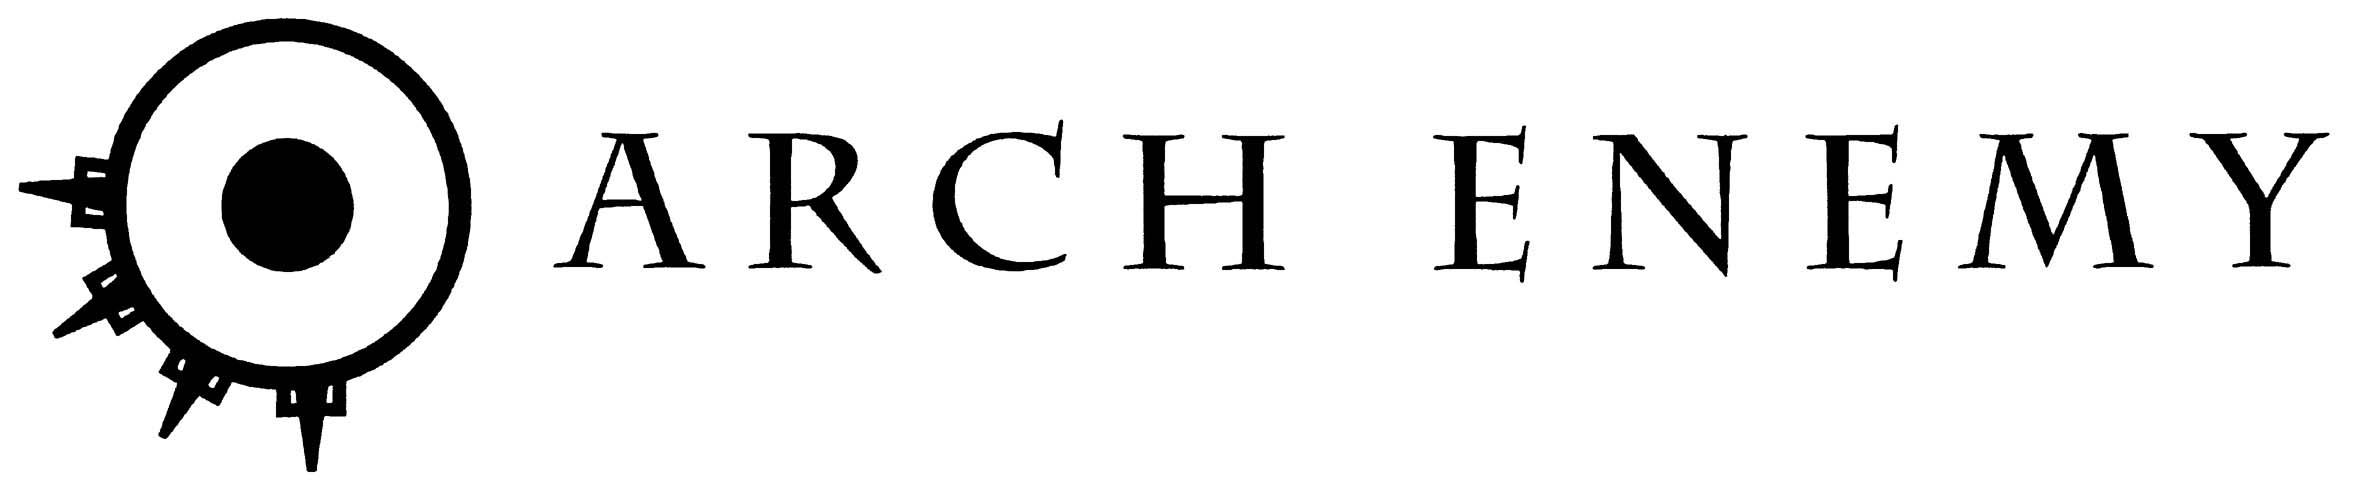 Arch Enemy Decal / Sticker 06